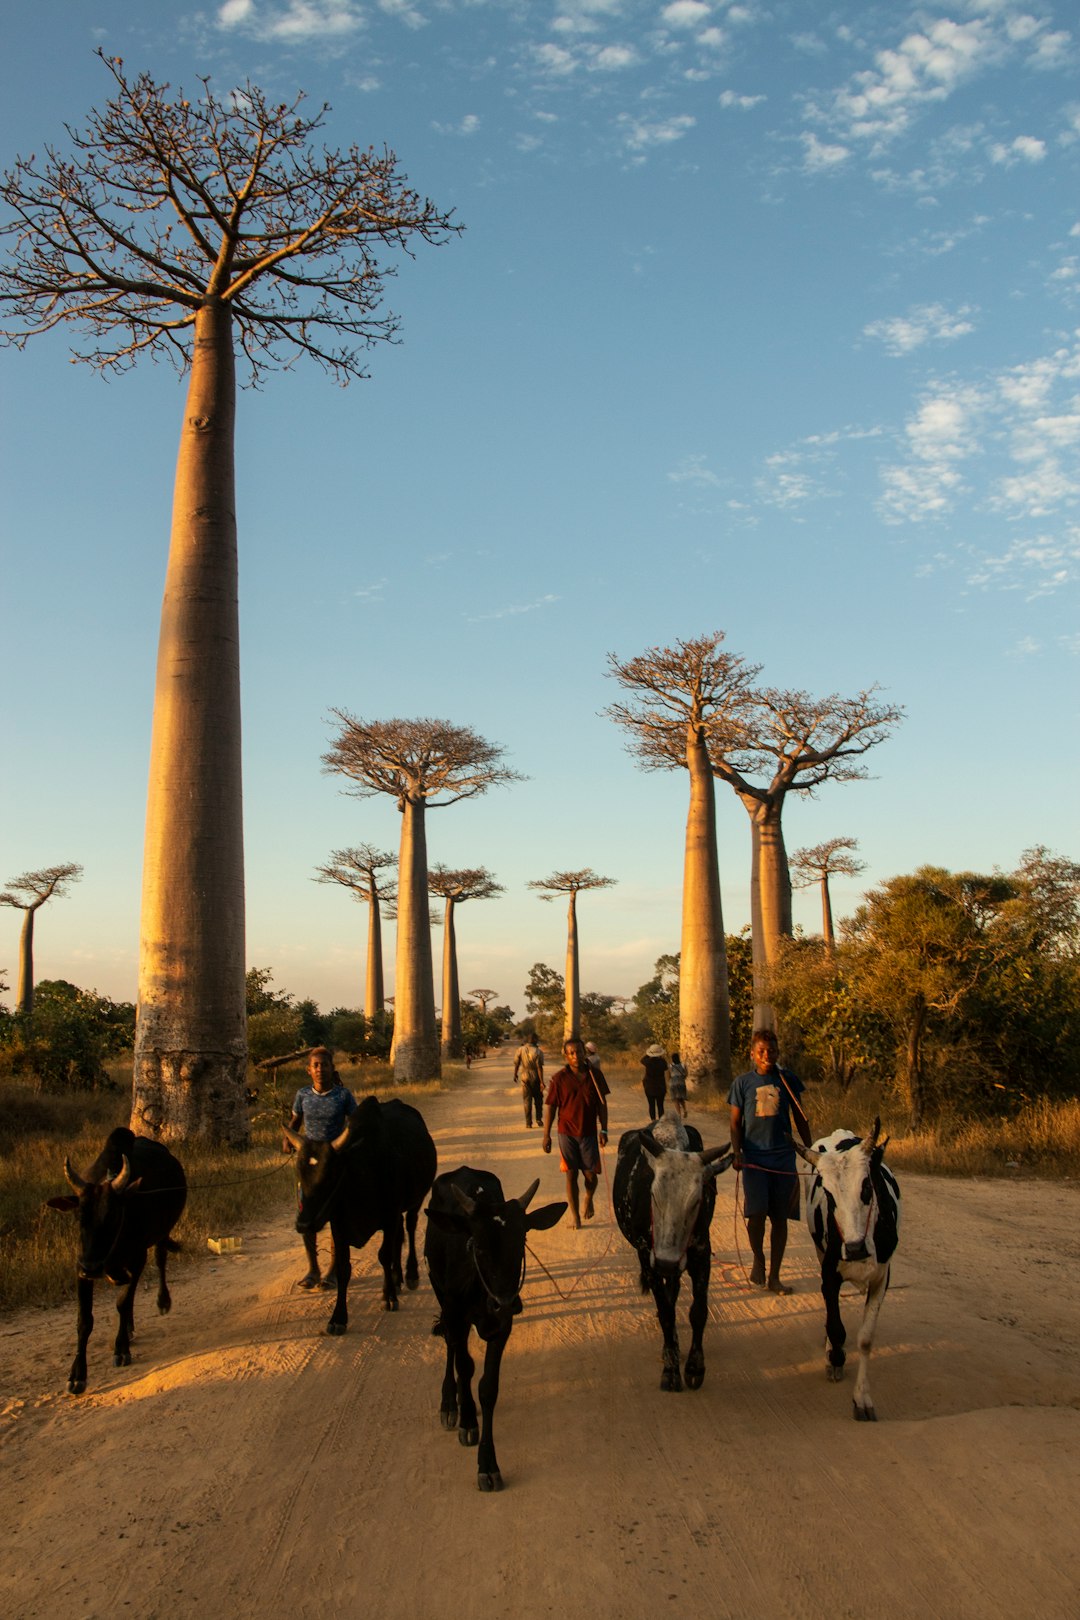 travelers stories about Ecoregion in Allée des baobabs, Madagascar